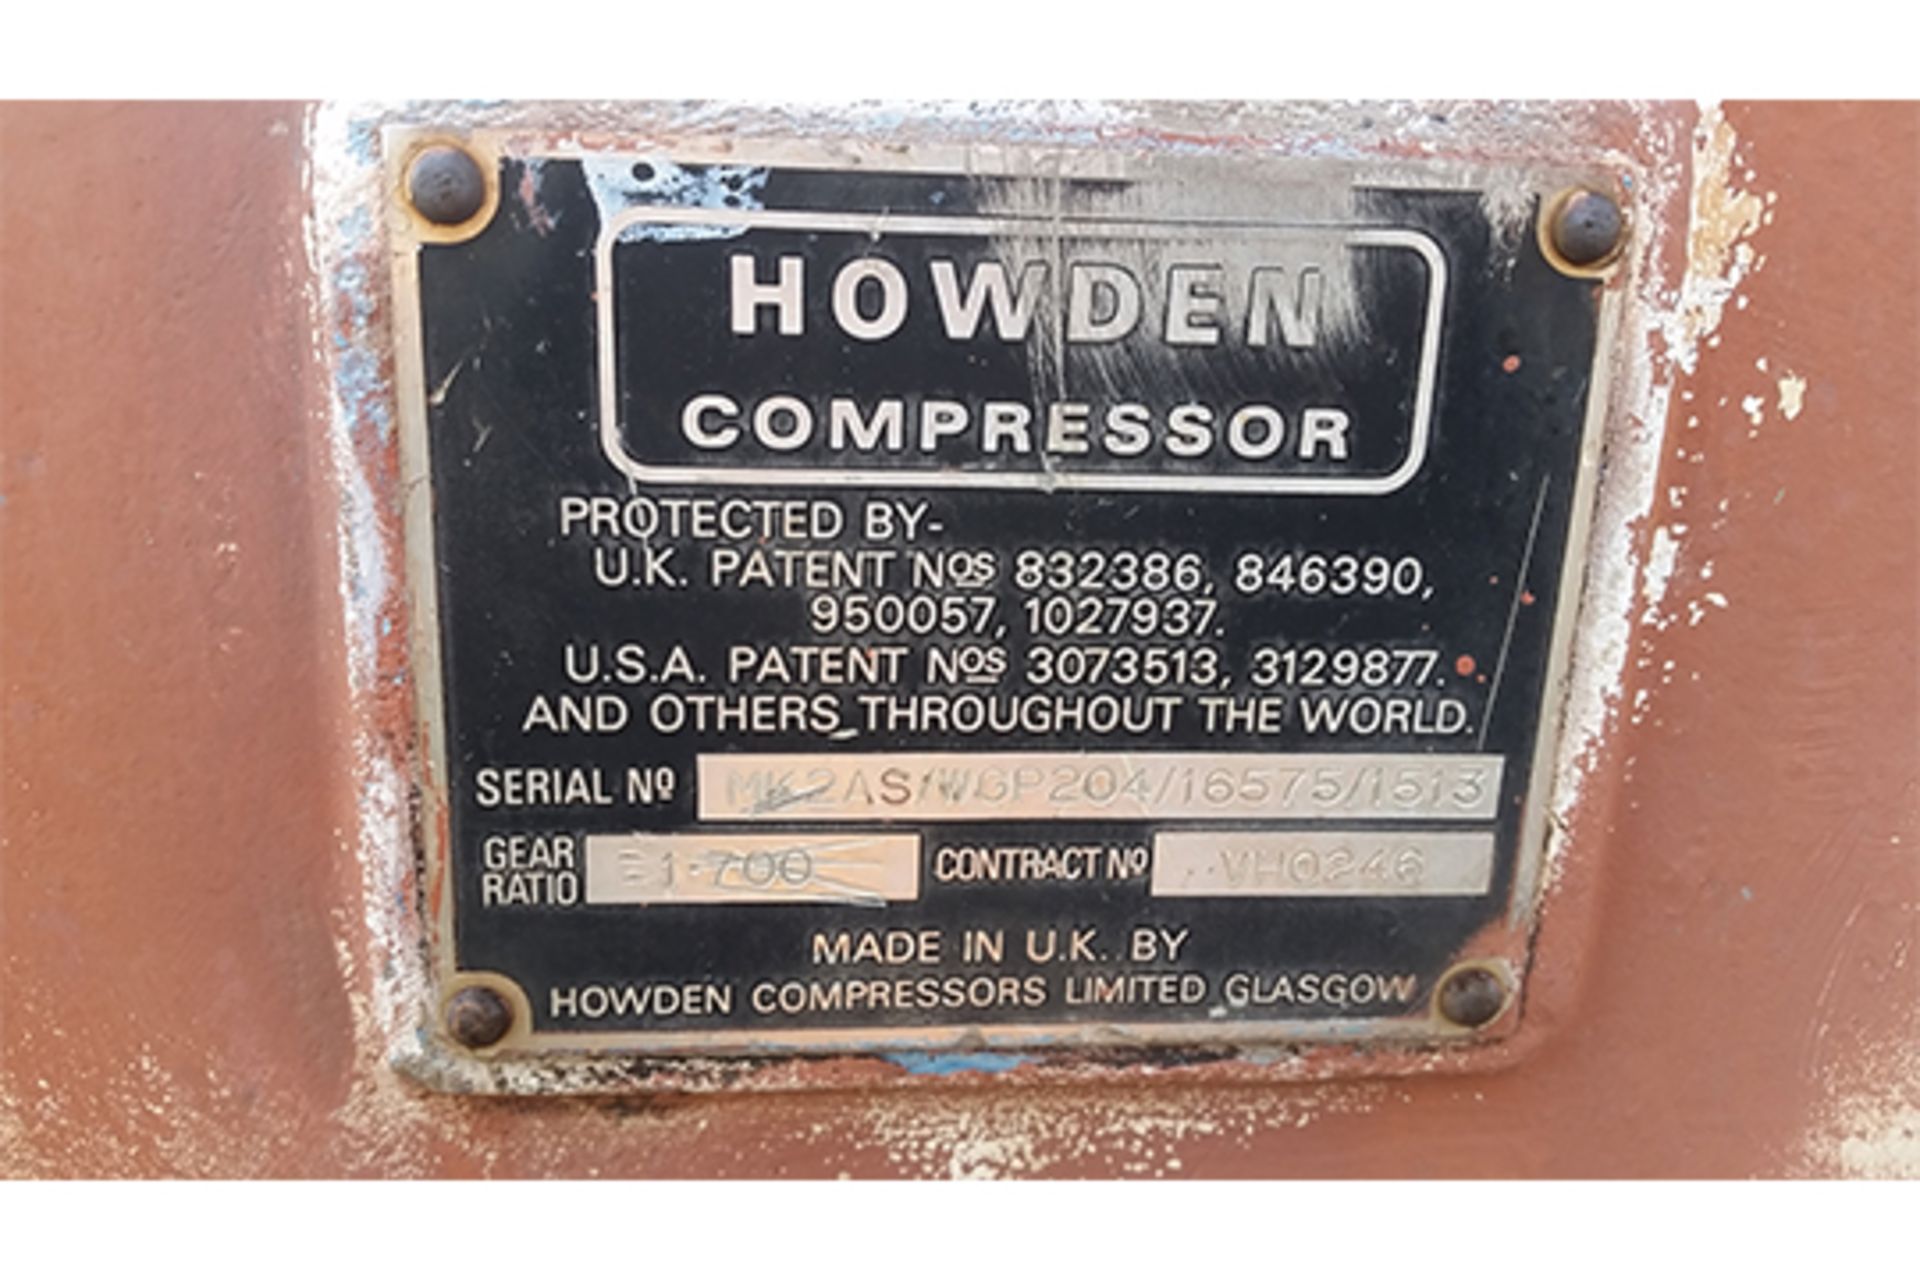 Howden compressor - Image 2 of 4